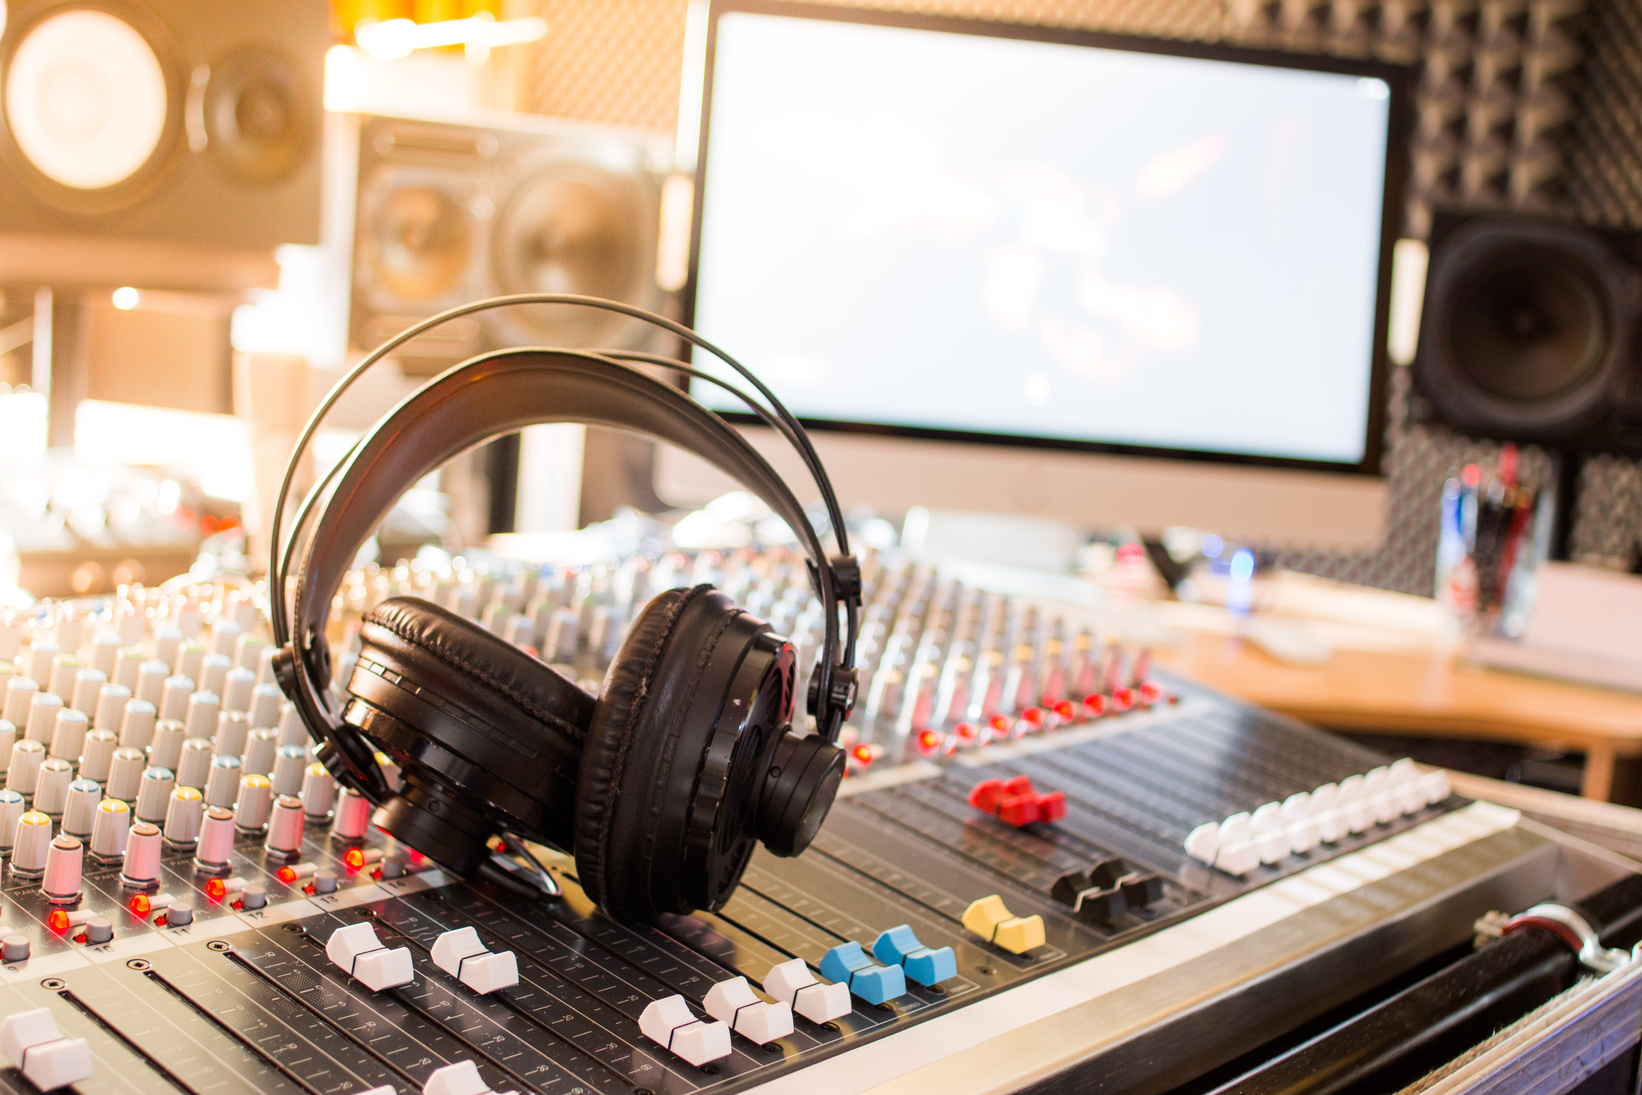 Sound recording studio mixer desk: professional music production